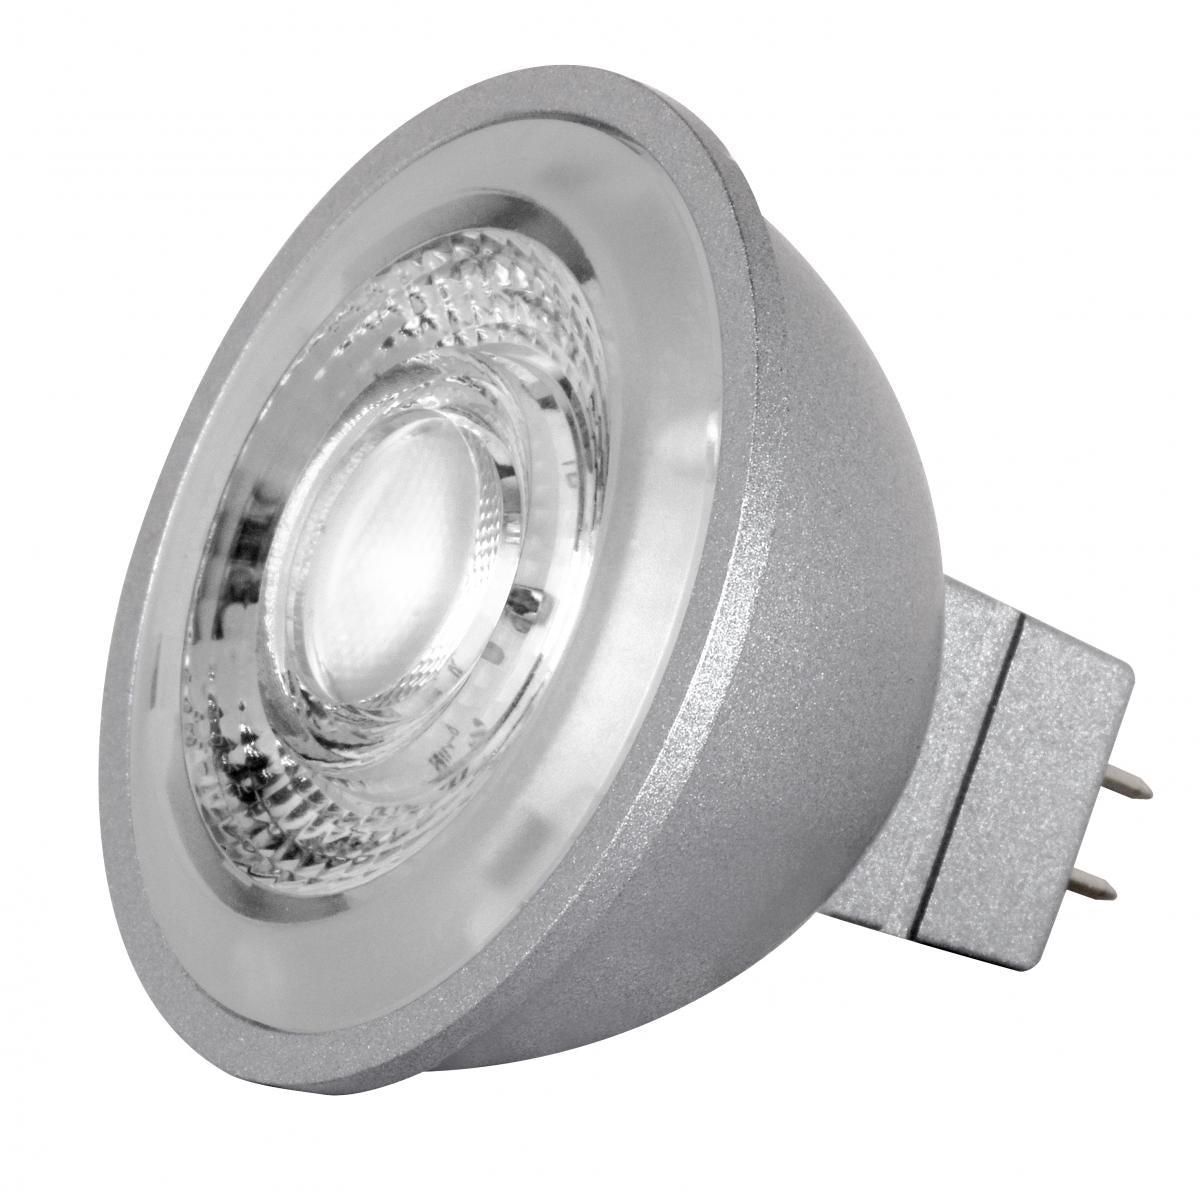 MR16 Reflector LED bulb, 8 watt, 490 Lumens, 3000K, GU5.3 Base, 40 Deg. Flood